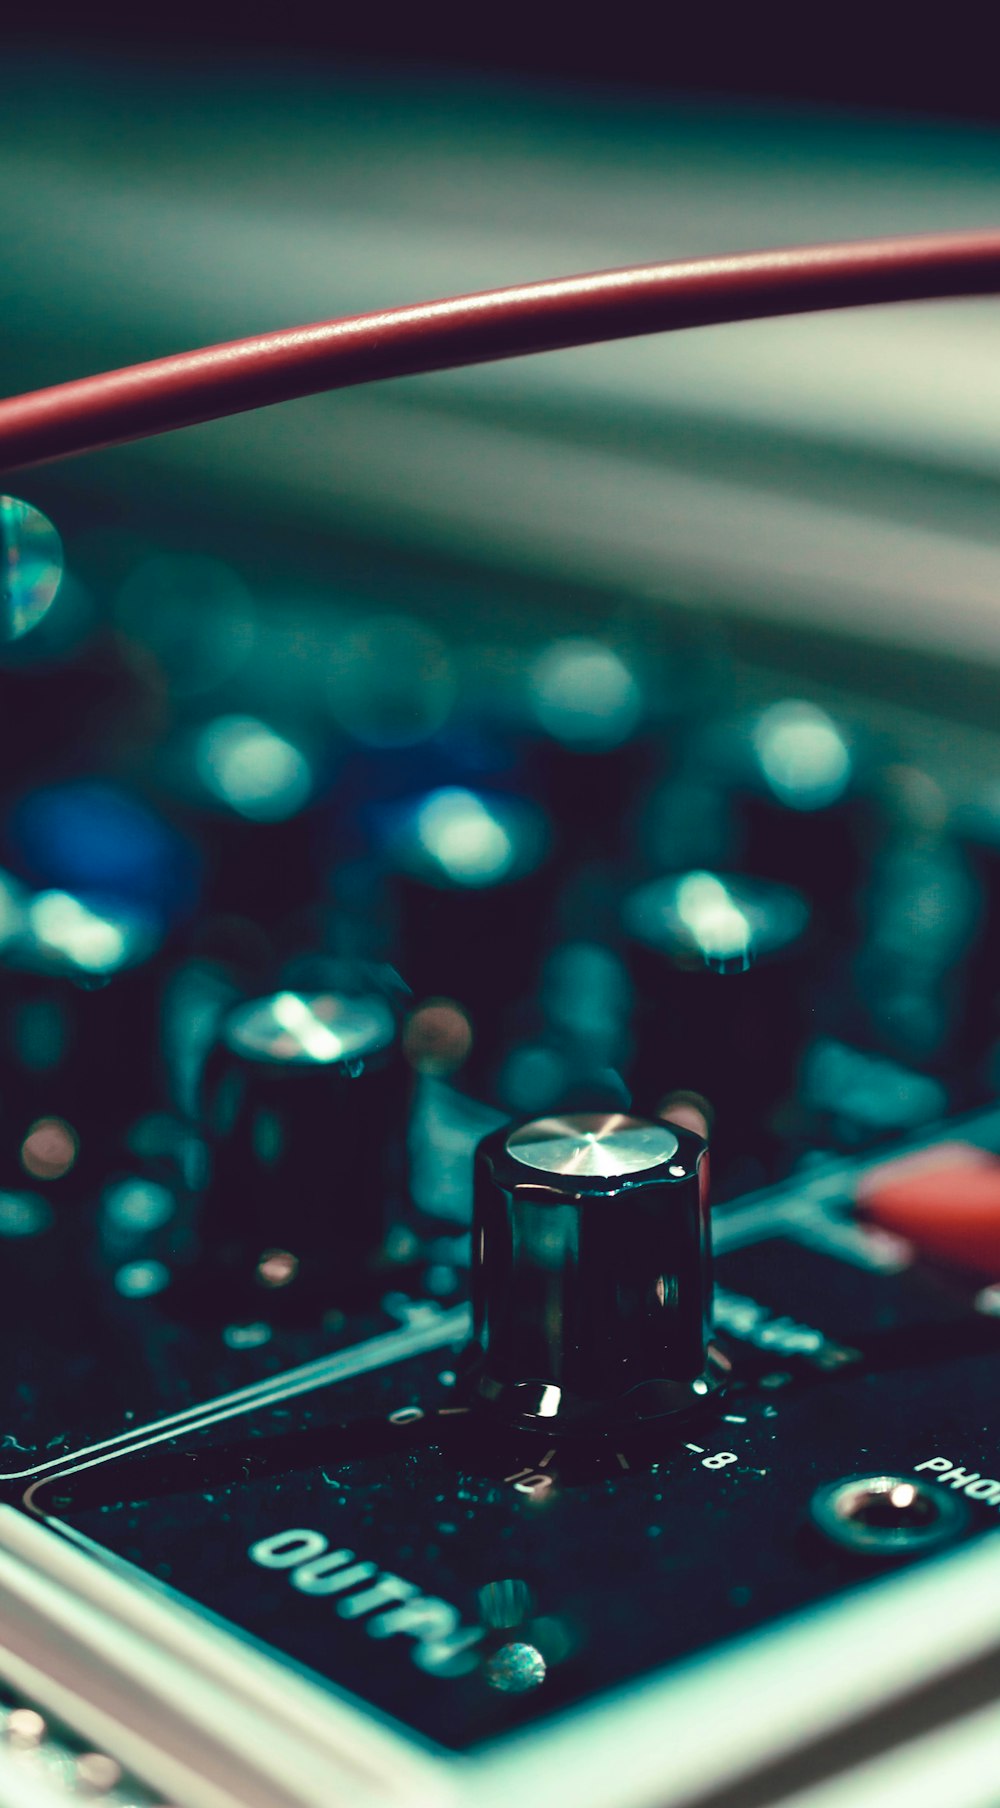 black and gray audio mixer close-up photo